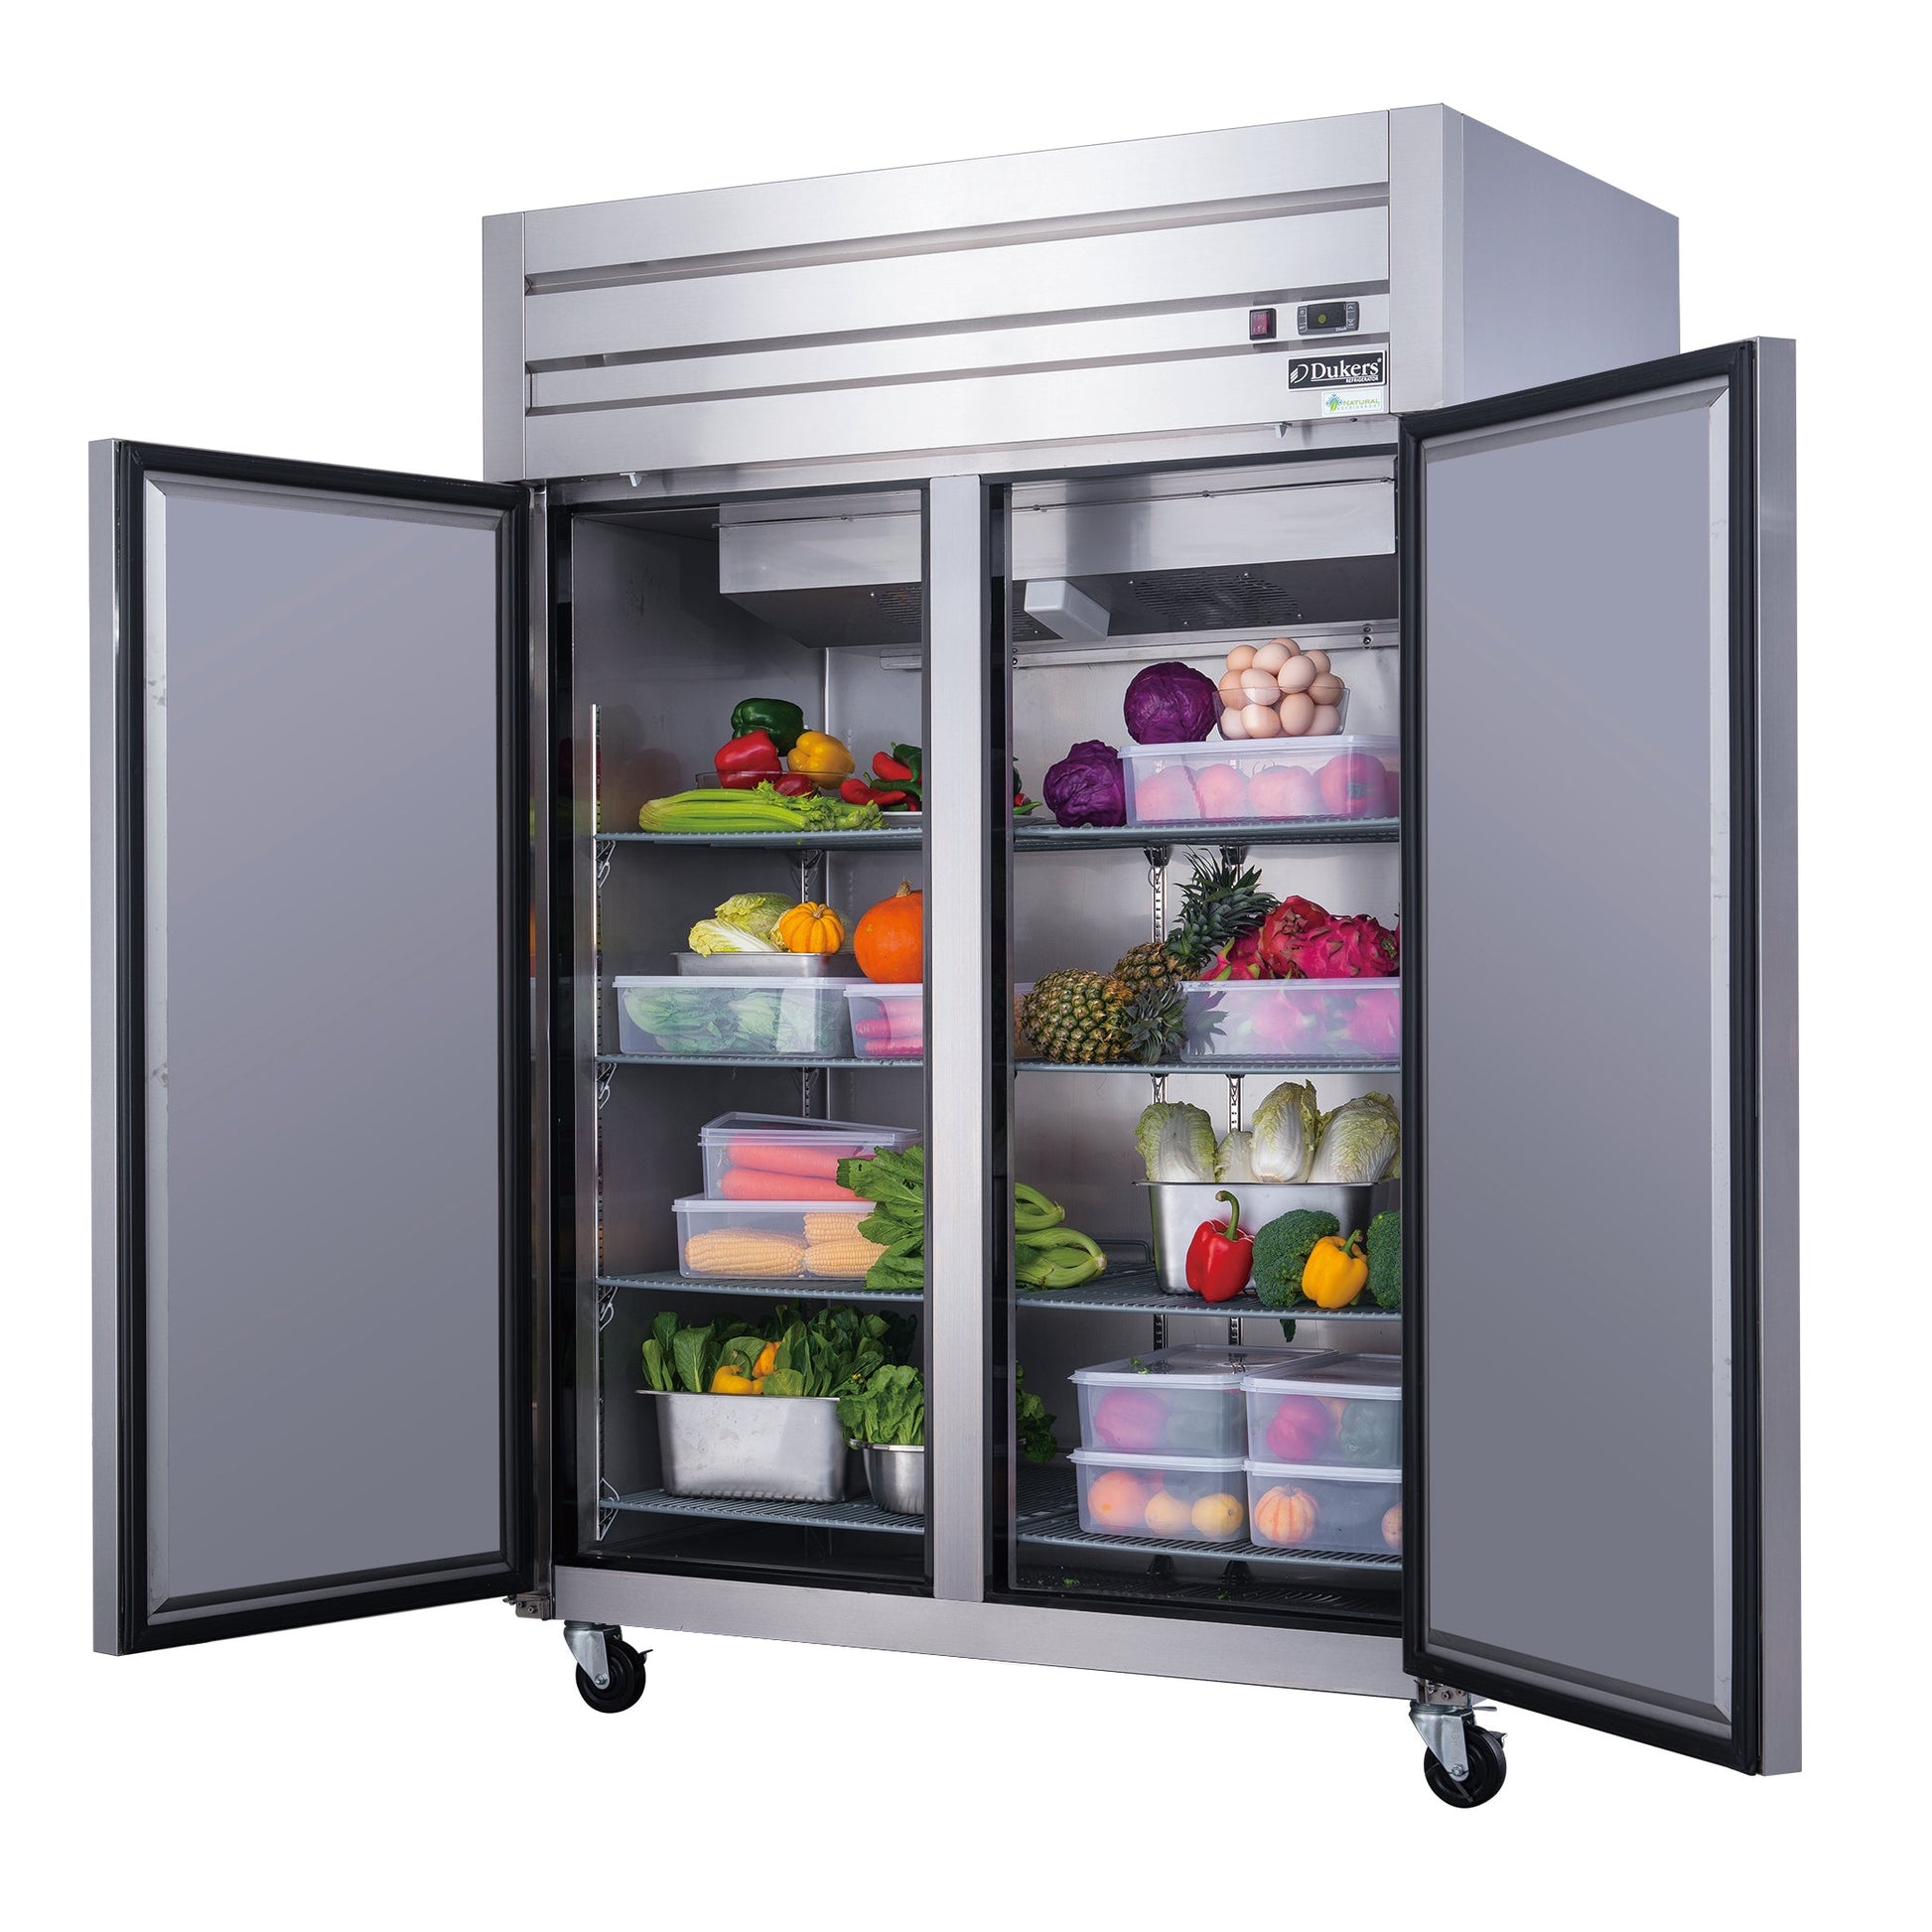 Dukers D55AR 2-Door Commercial Refrigerator